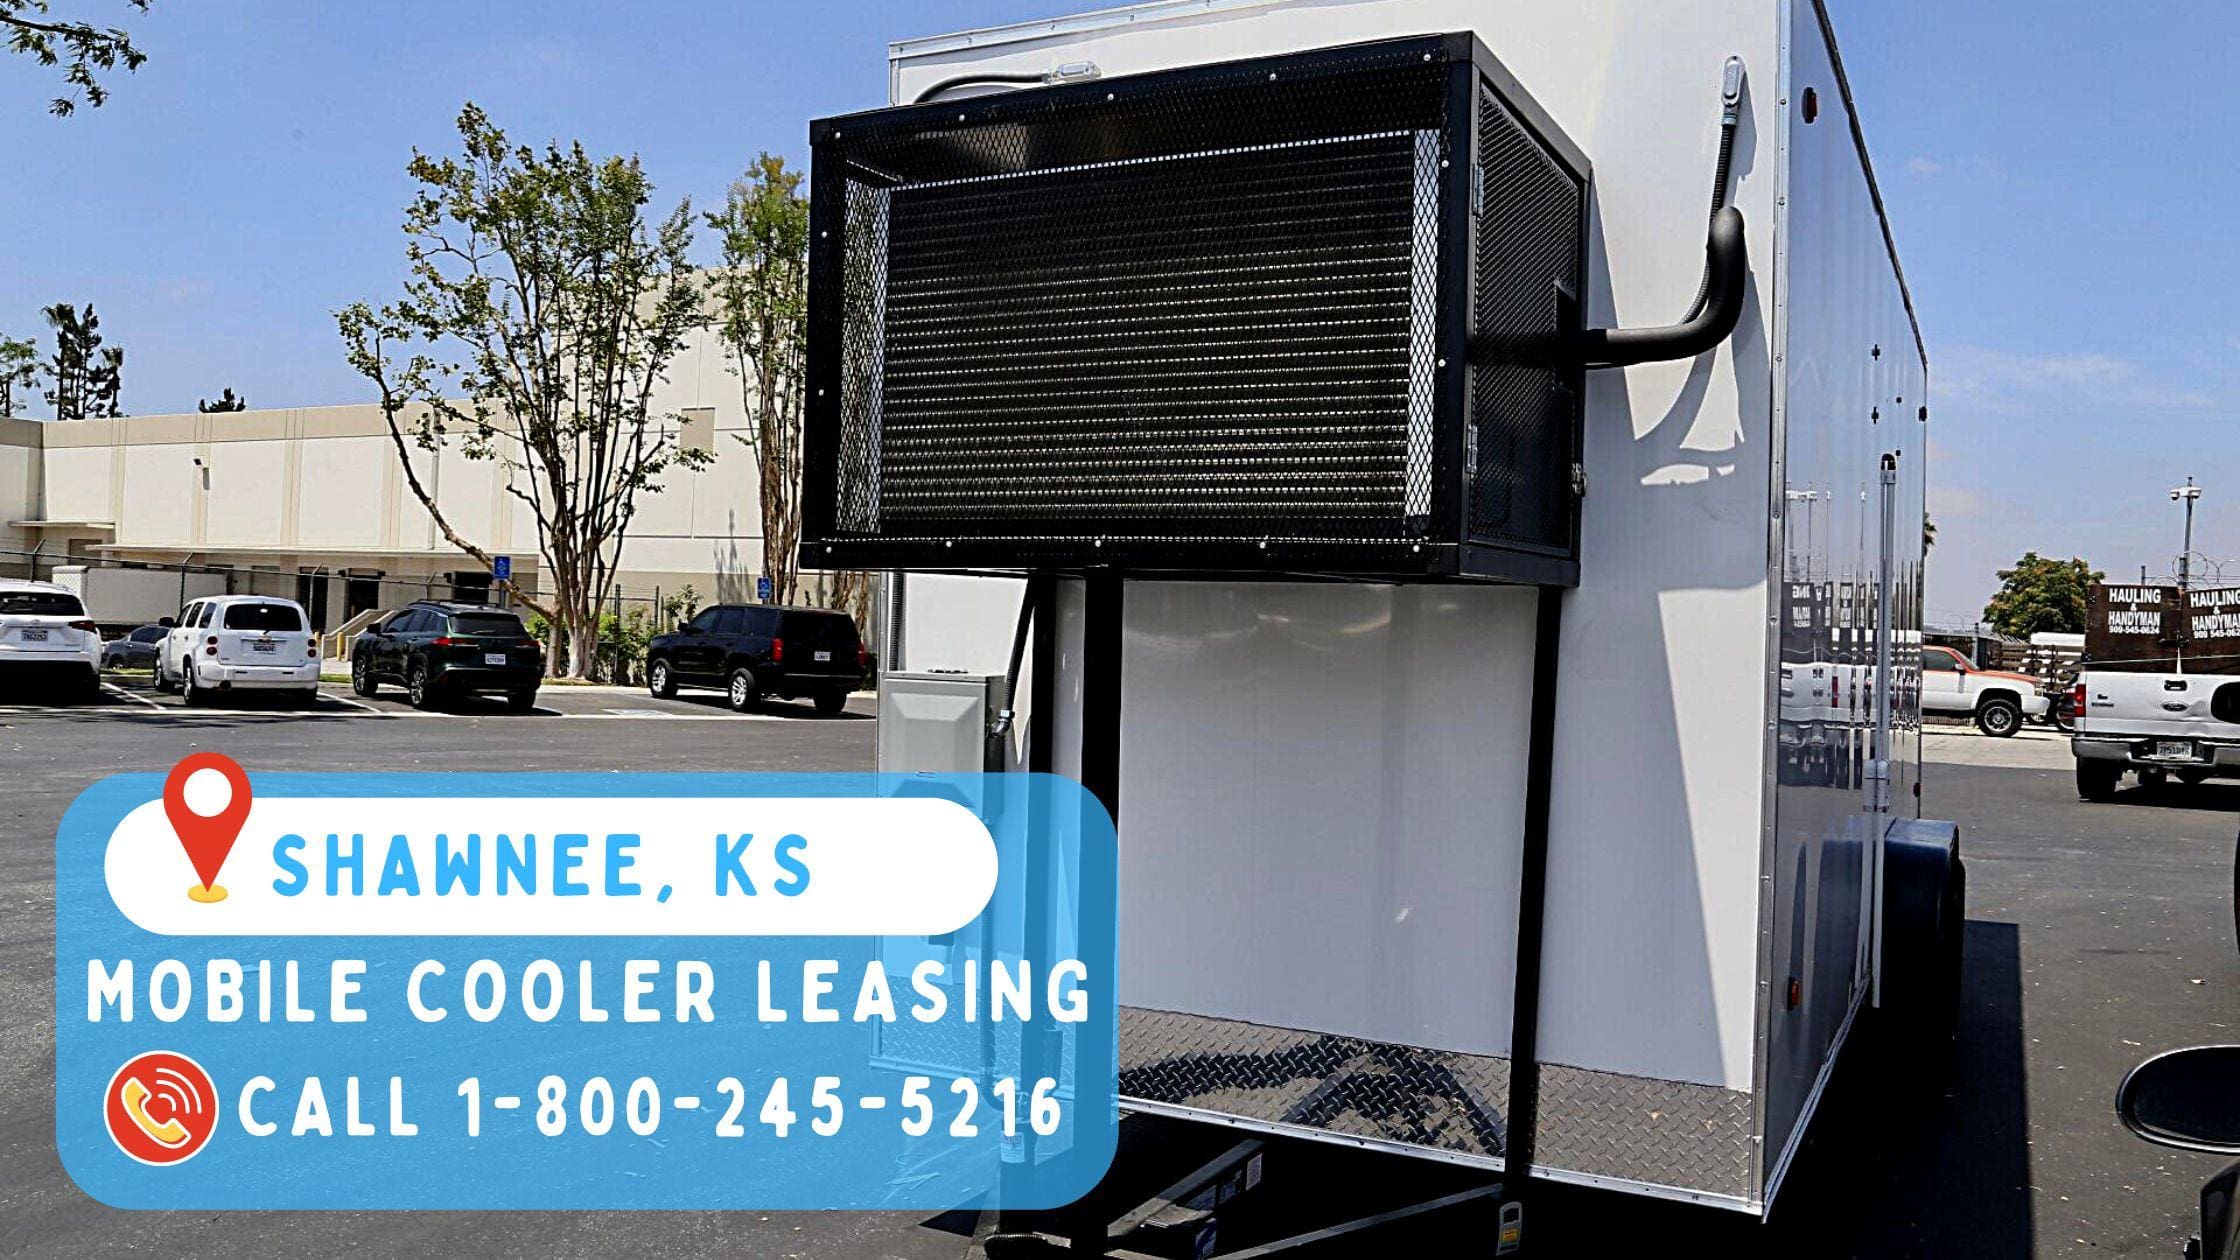 Mobile Cooler Leasing in Shawnee, KS